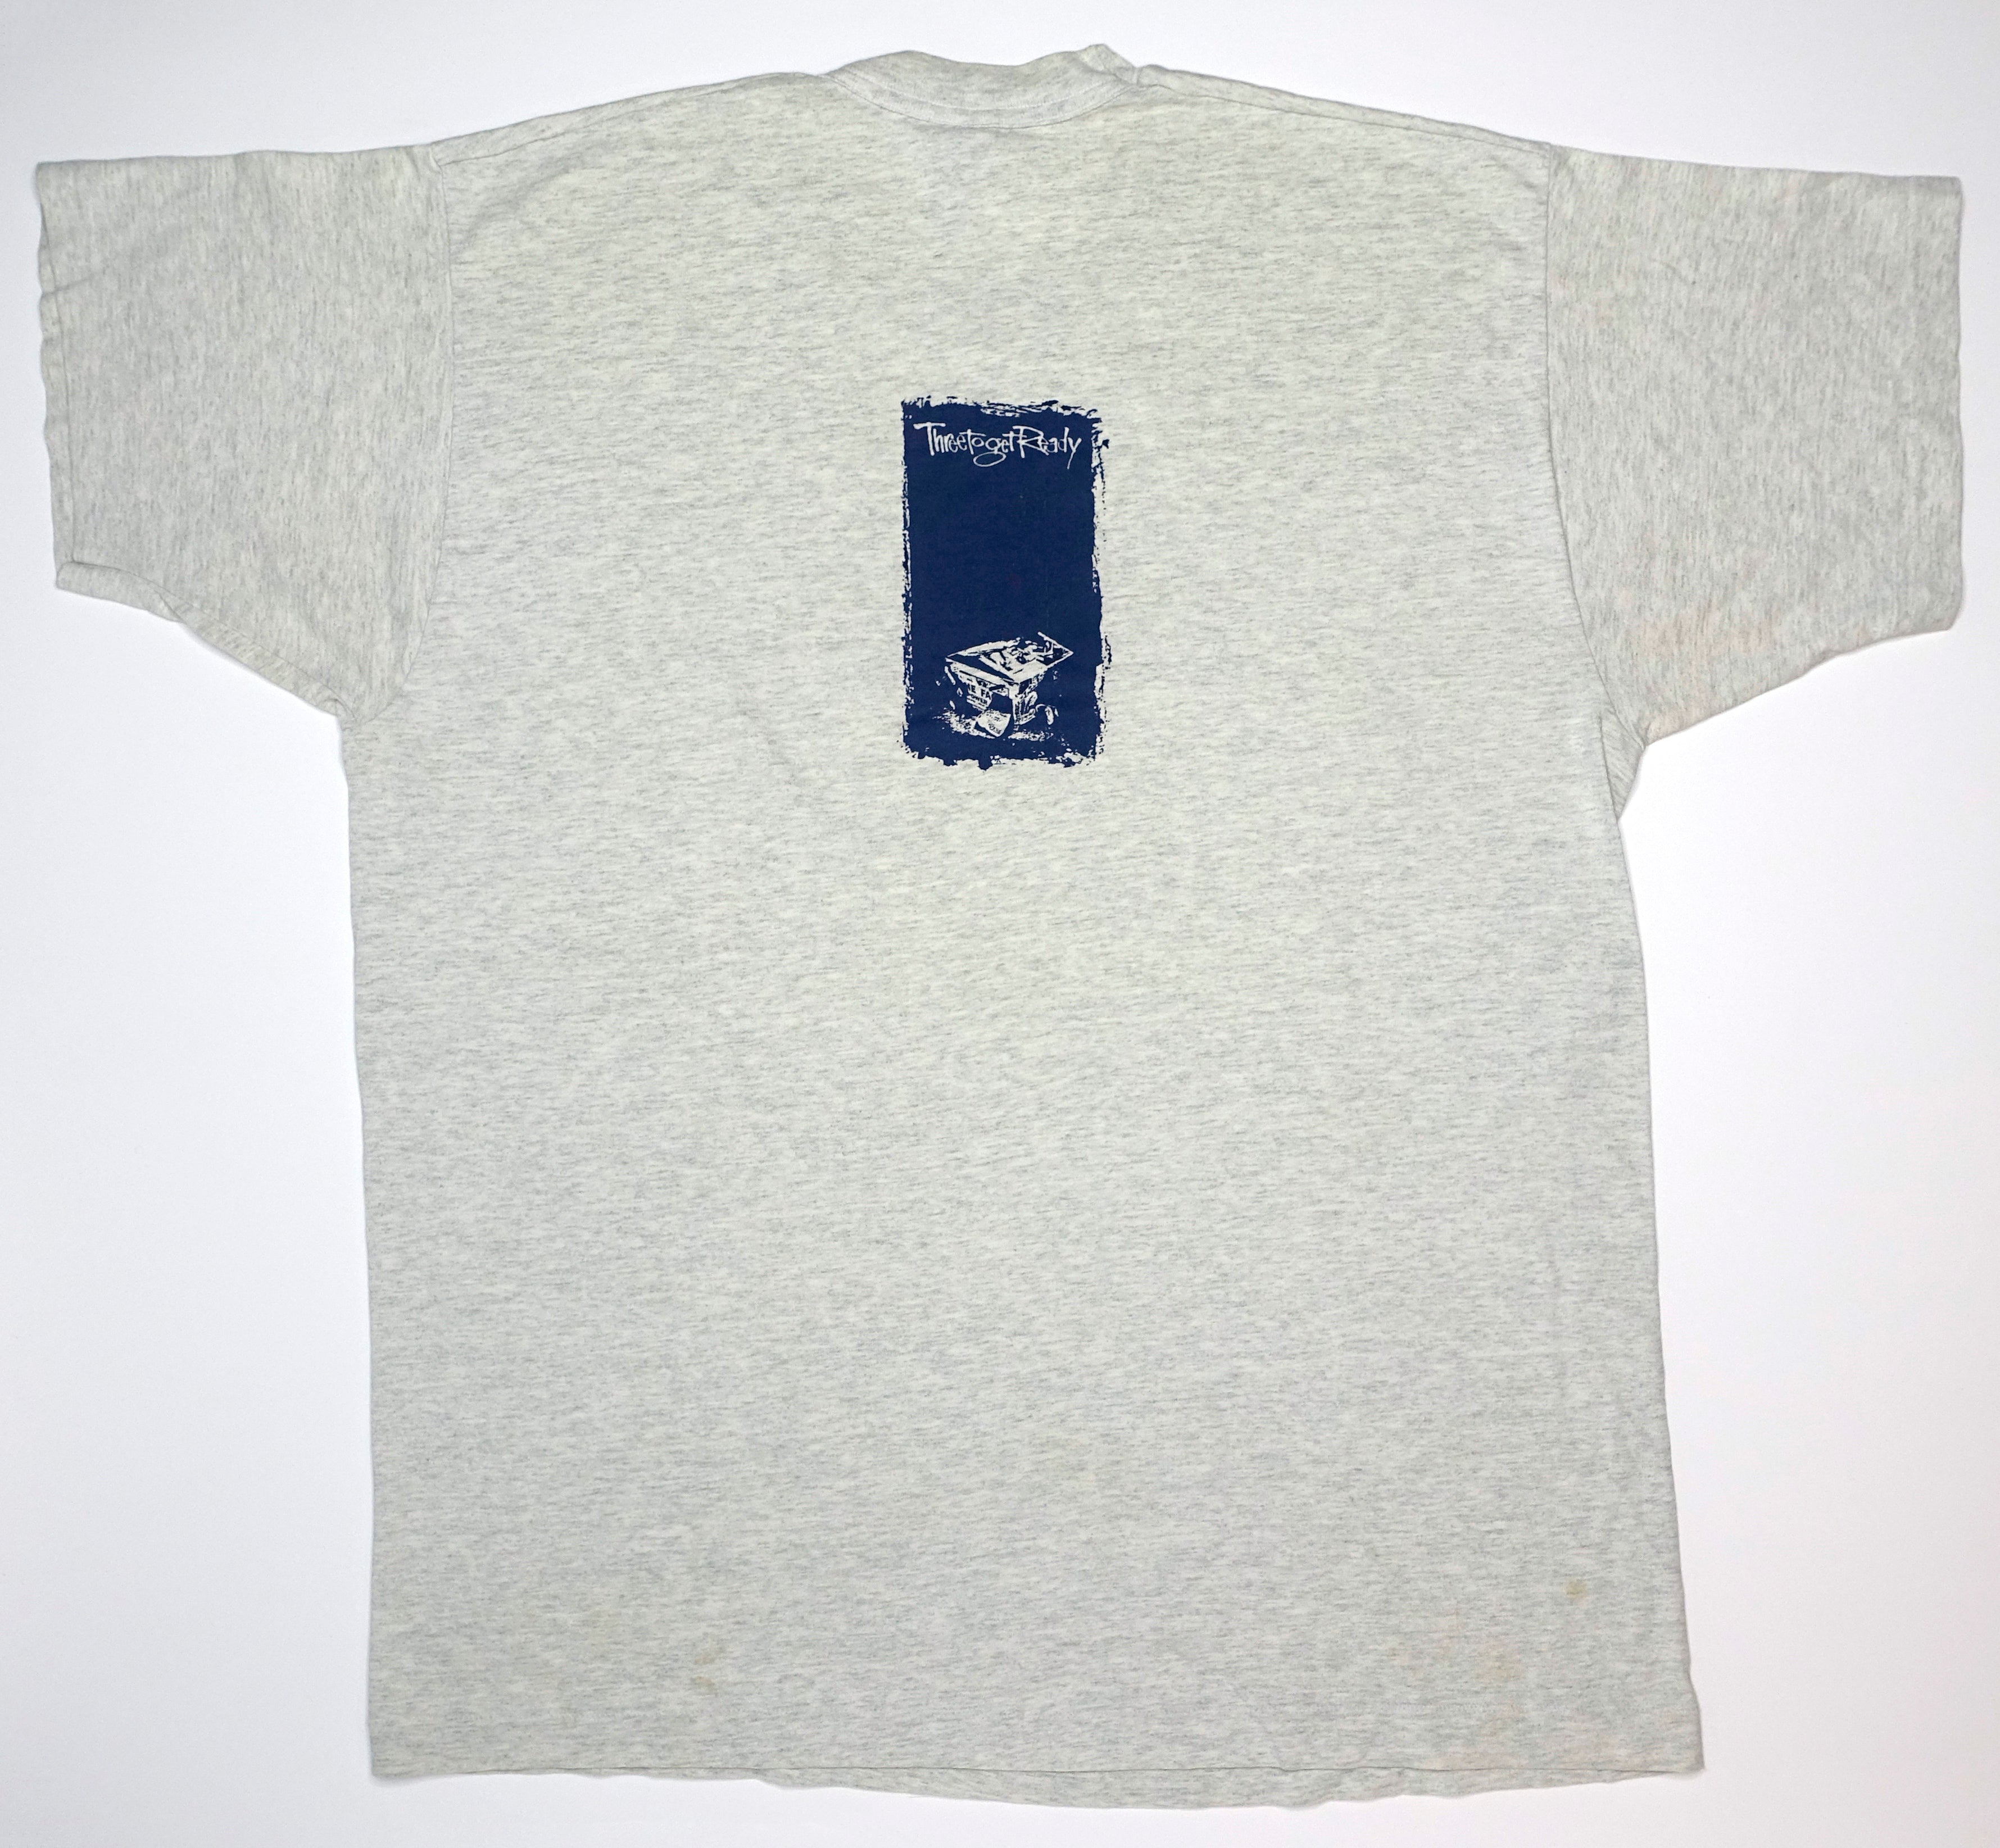 Gameface - Three To Get Ready 1995 Tour Shirt Size XL